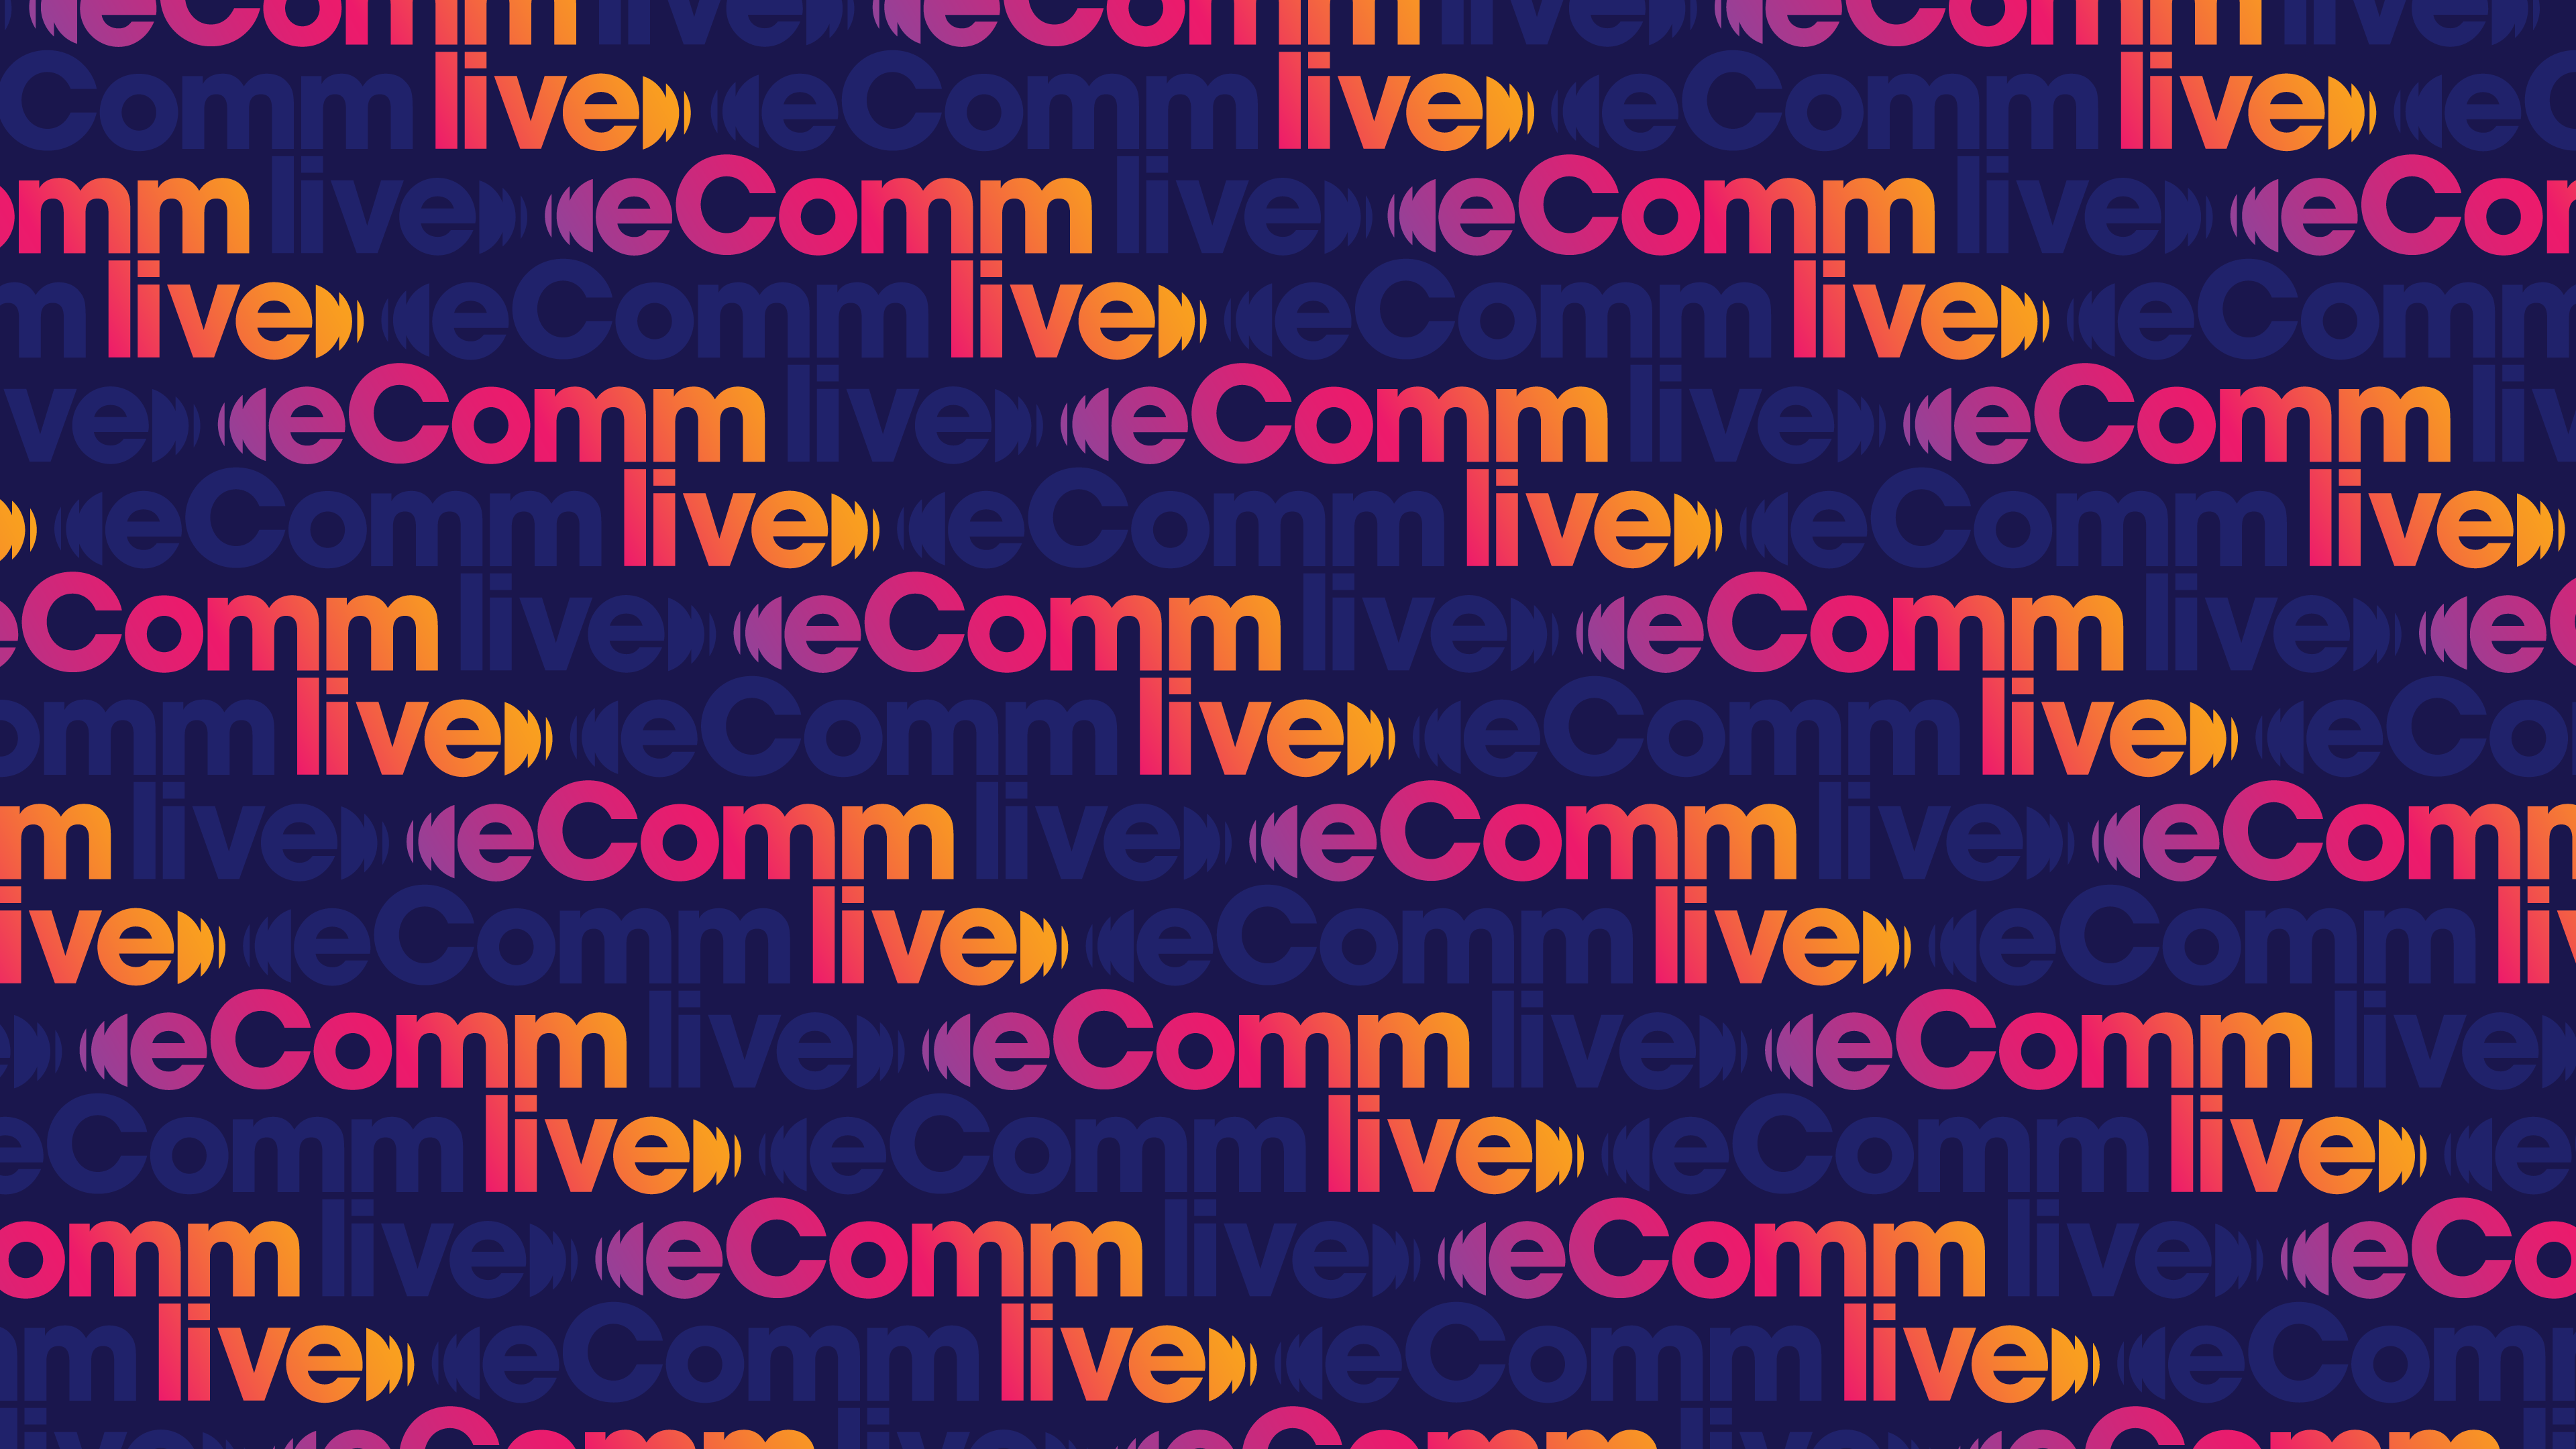 ecomm-live-fullscreen-cover